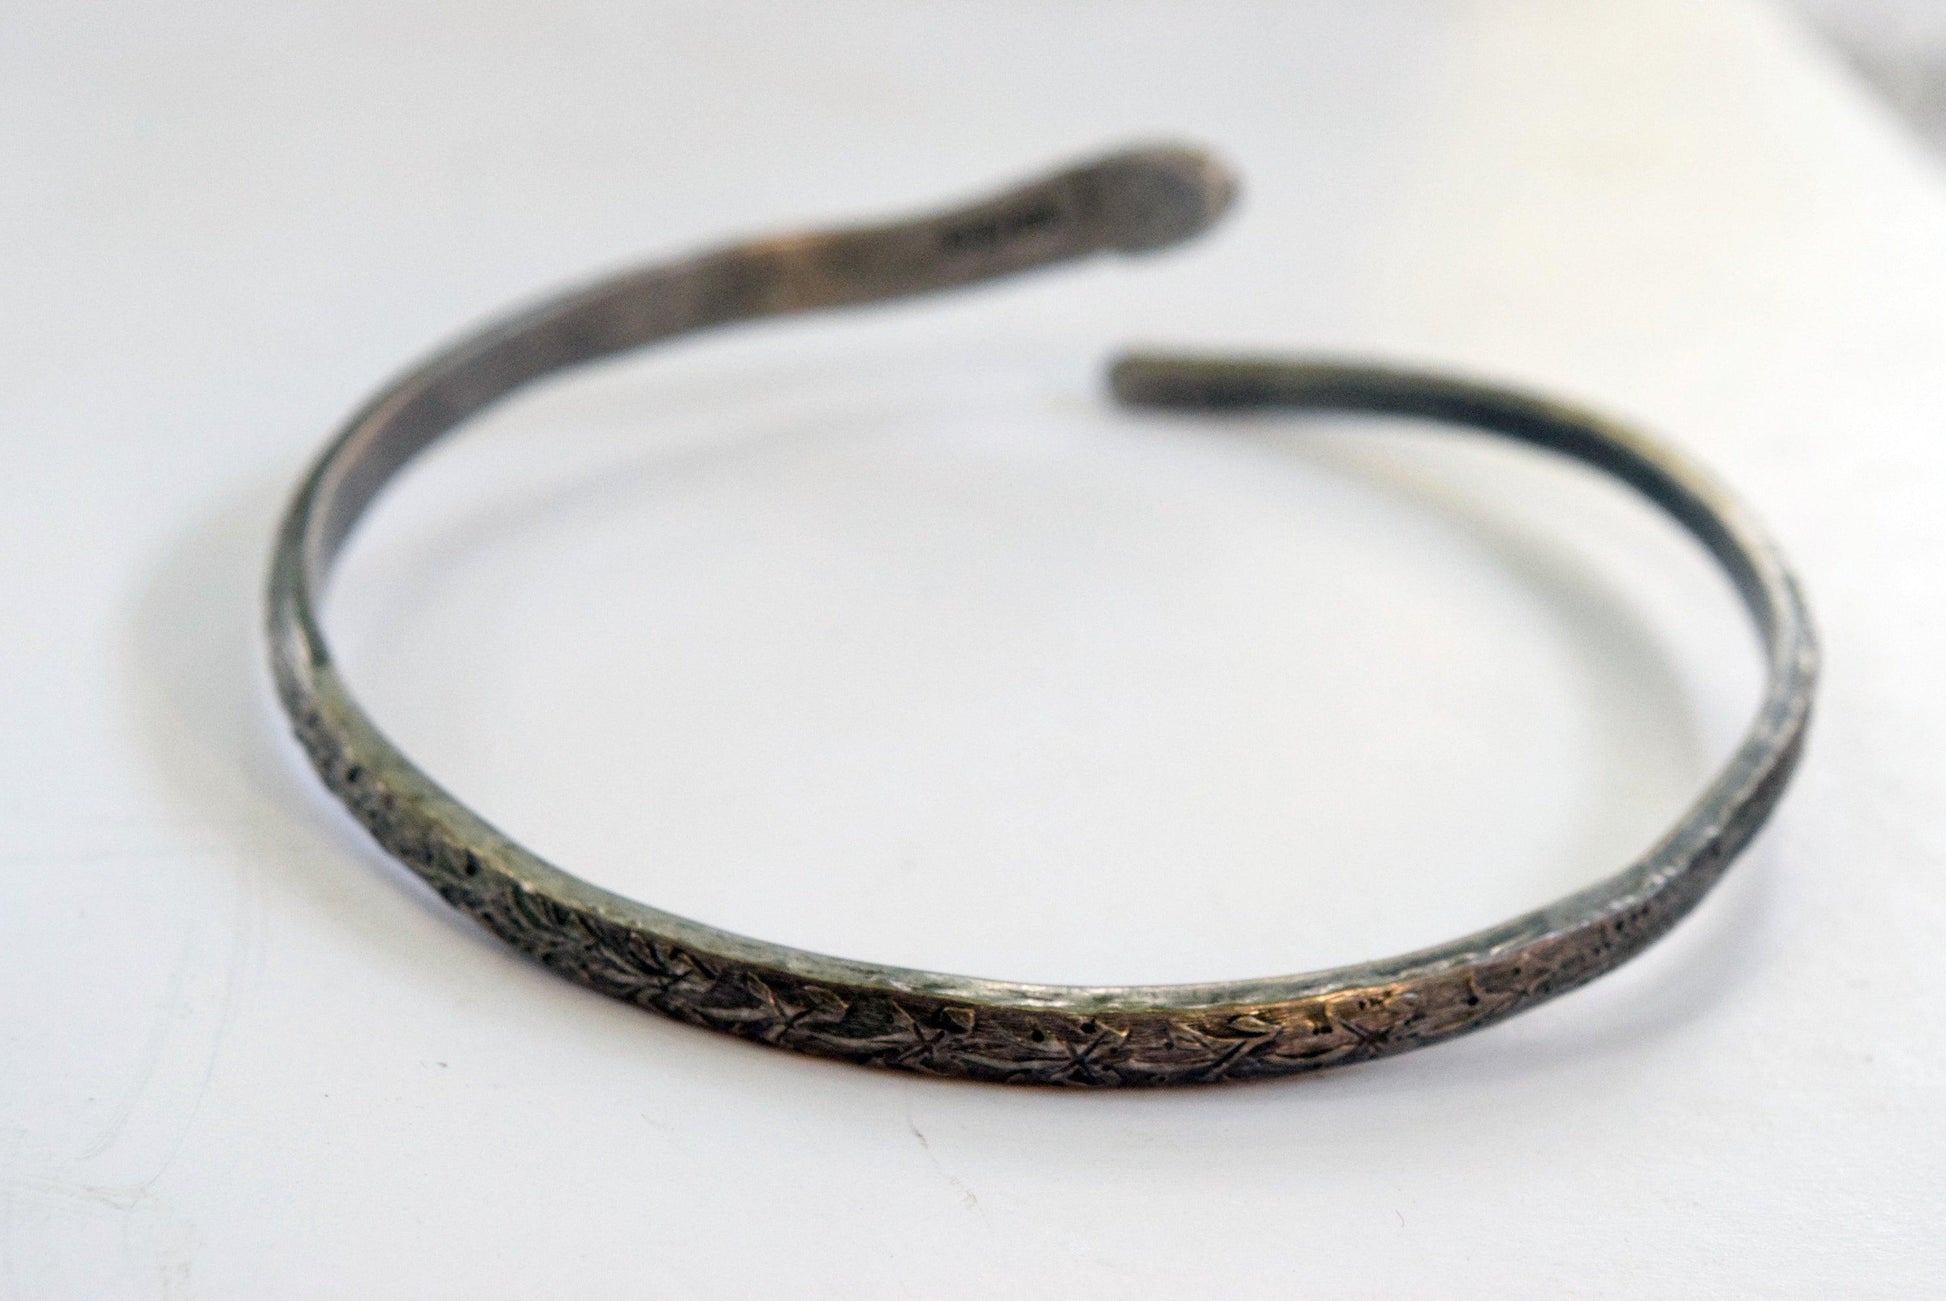 serpent bracelet